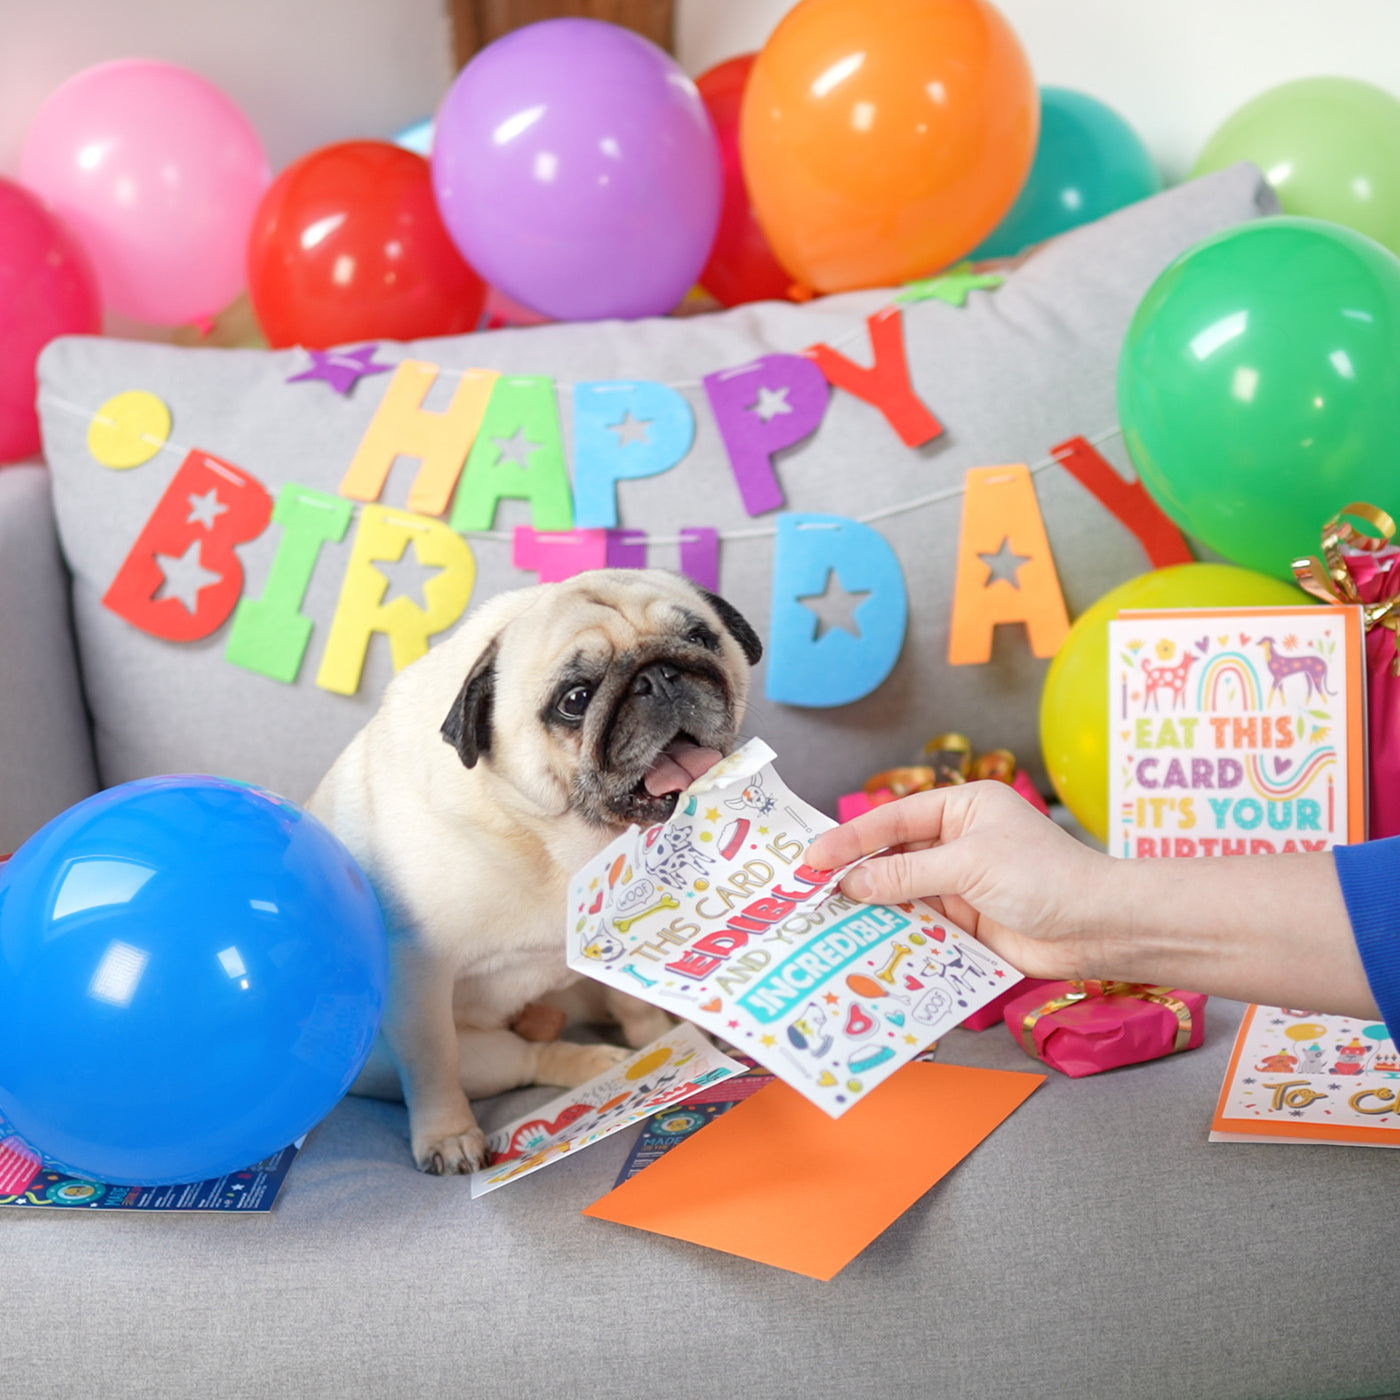 Heartfelt Birthday Messages for Your Beloved Dog